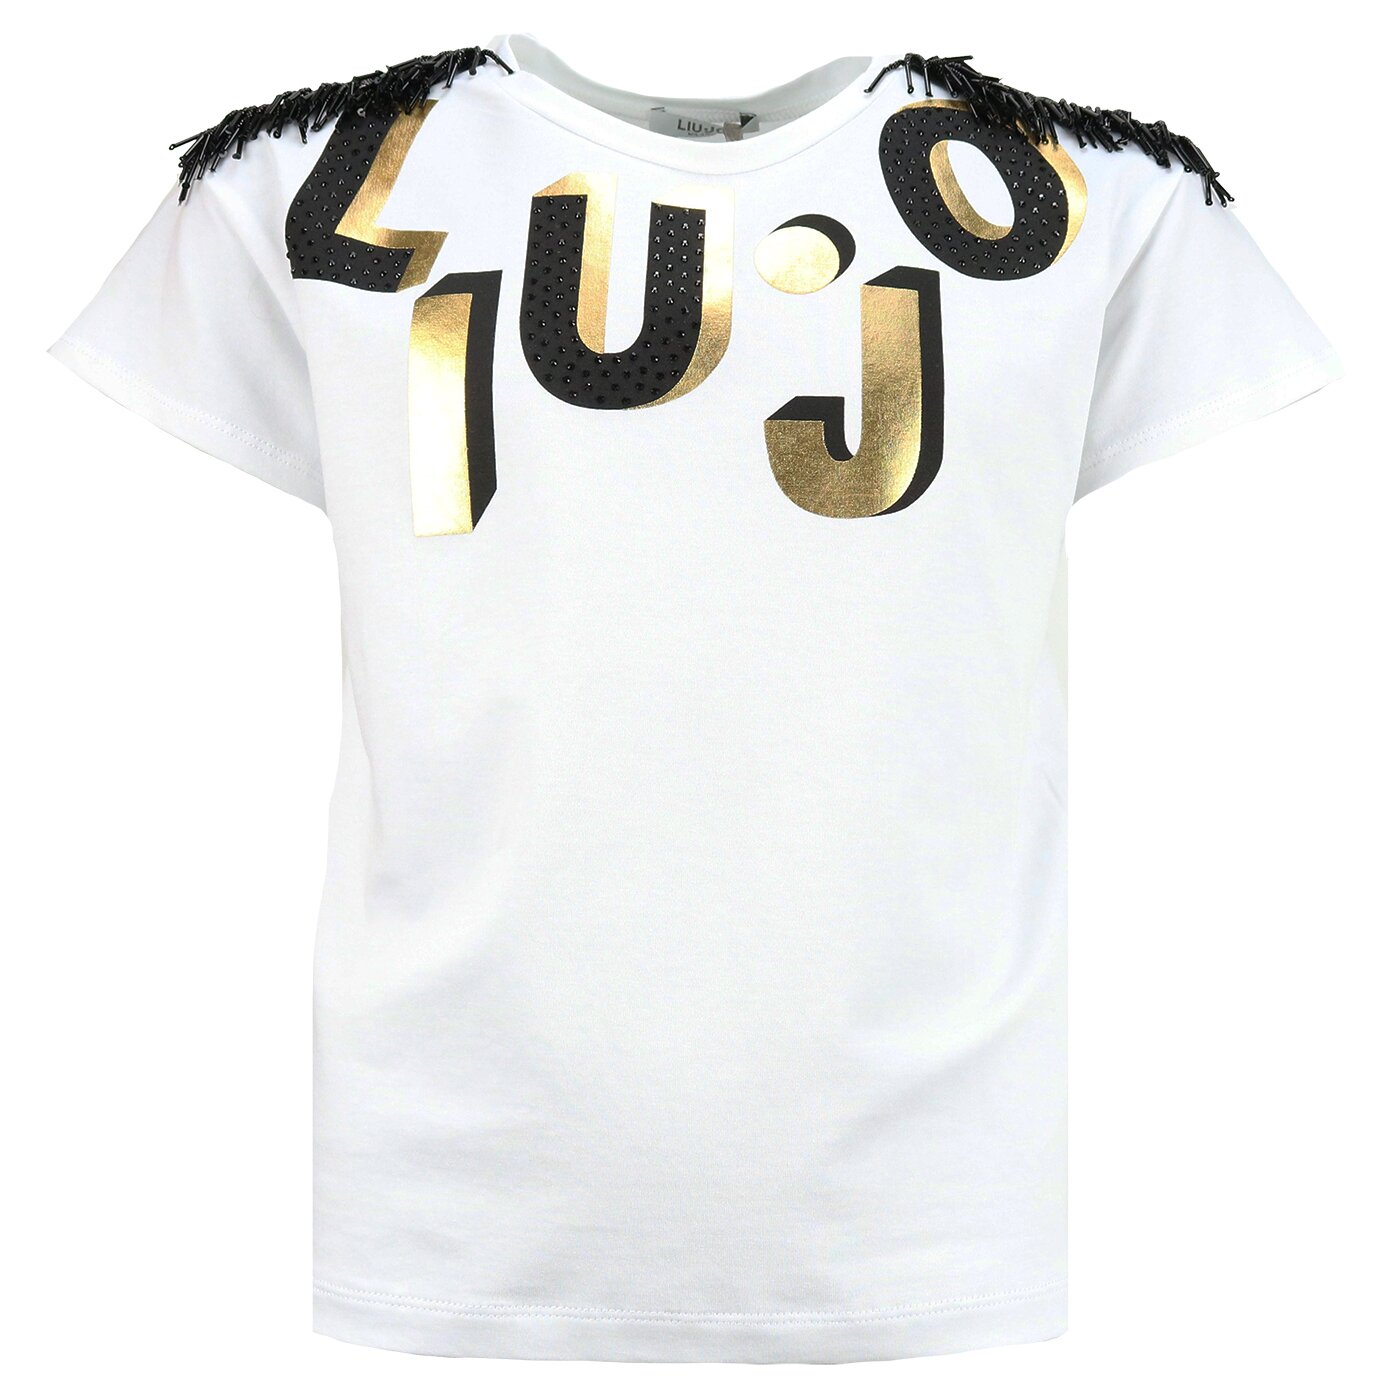 Politieagent Arbeid reservering Liu Jo webshop shirt GA1022 - Fashion for Kids & Teens